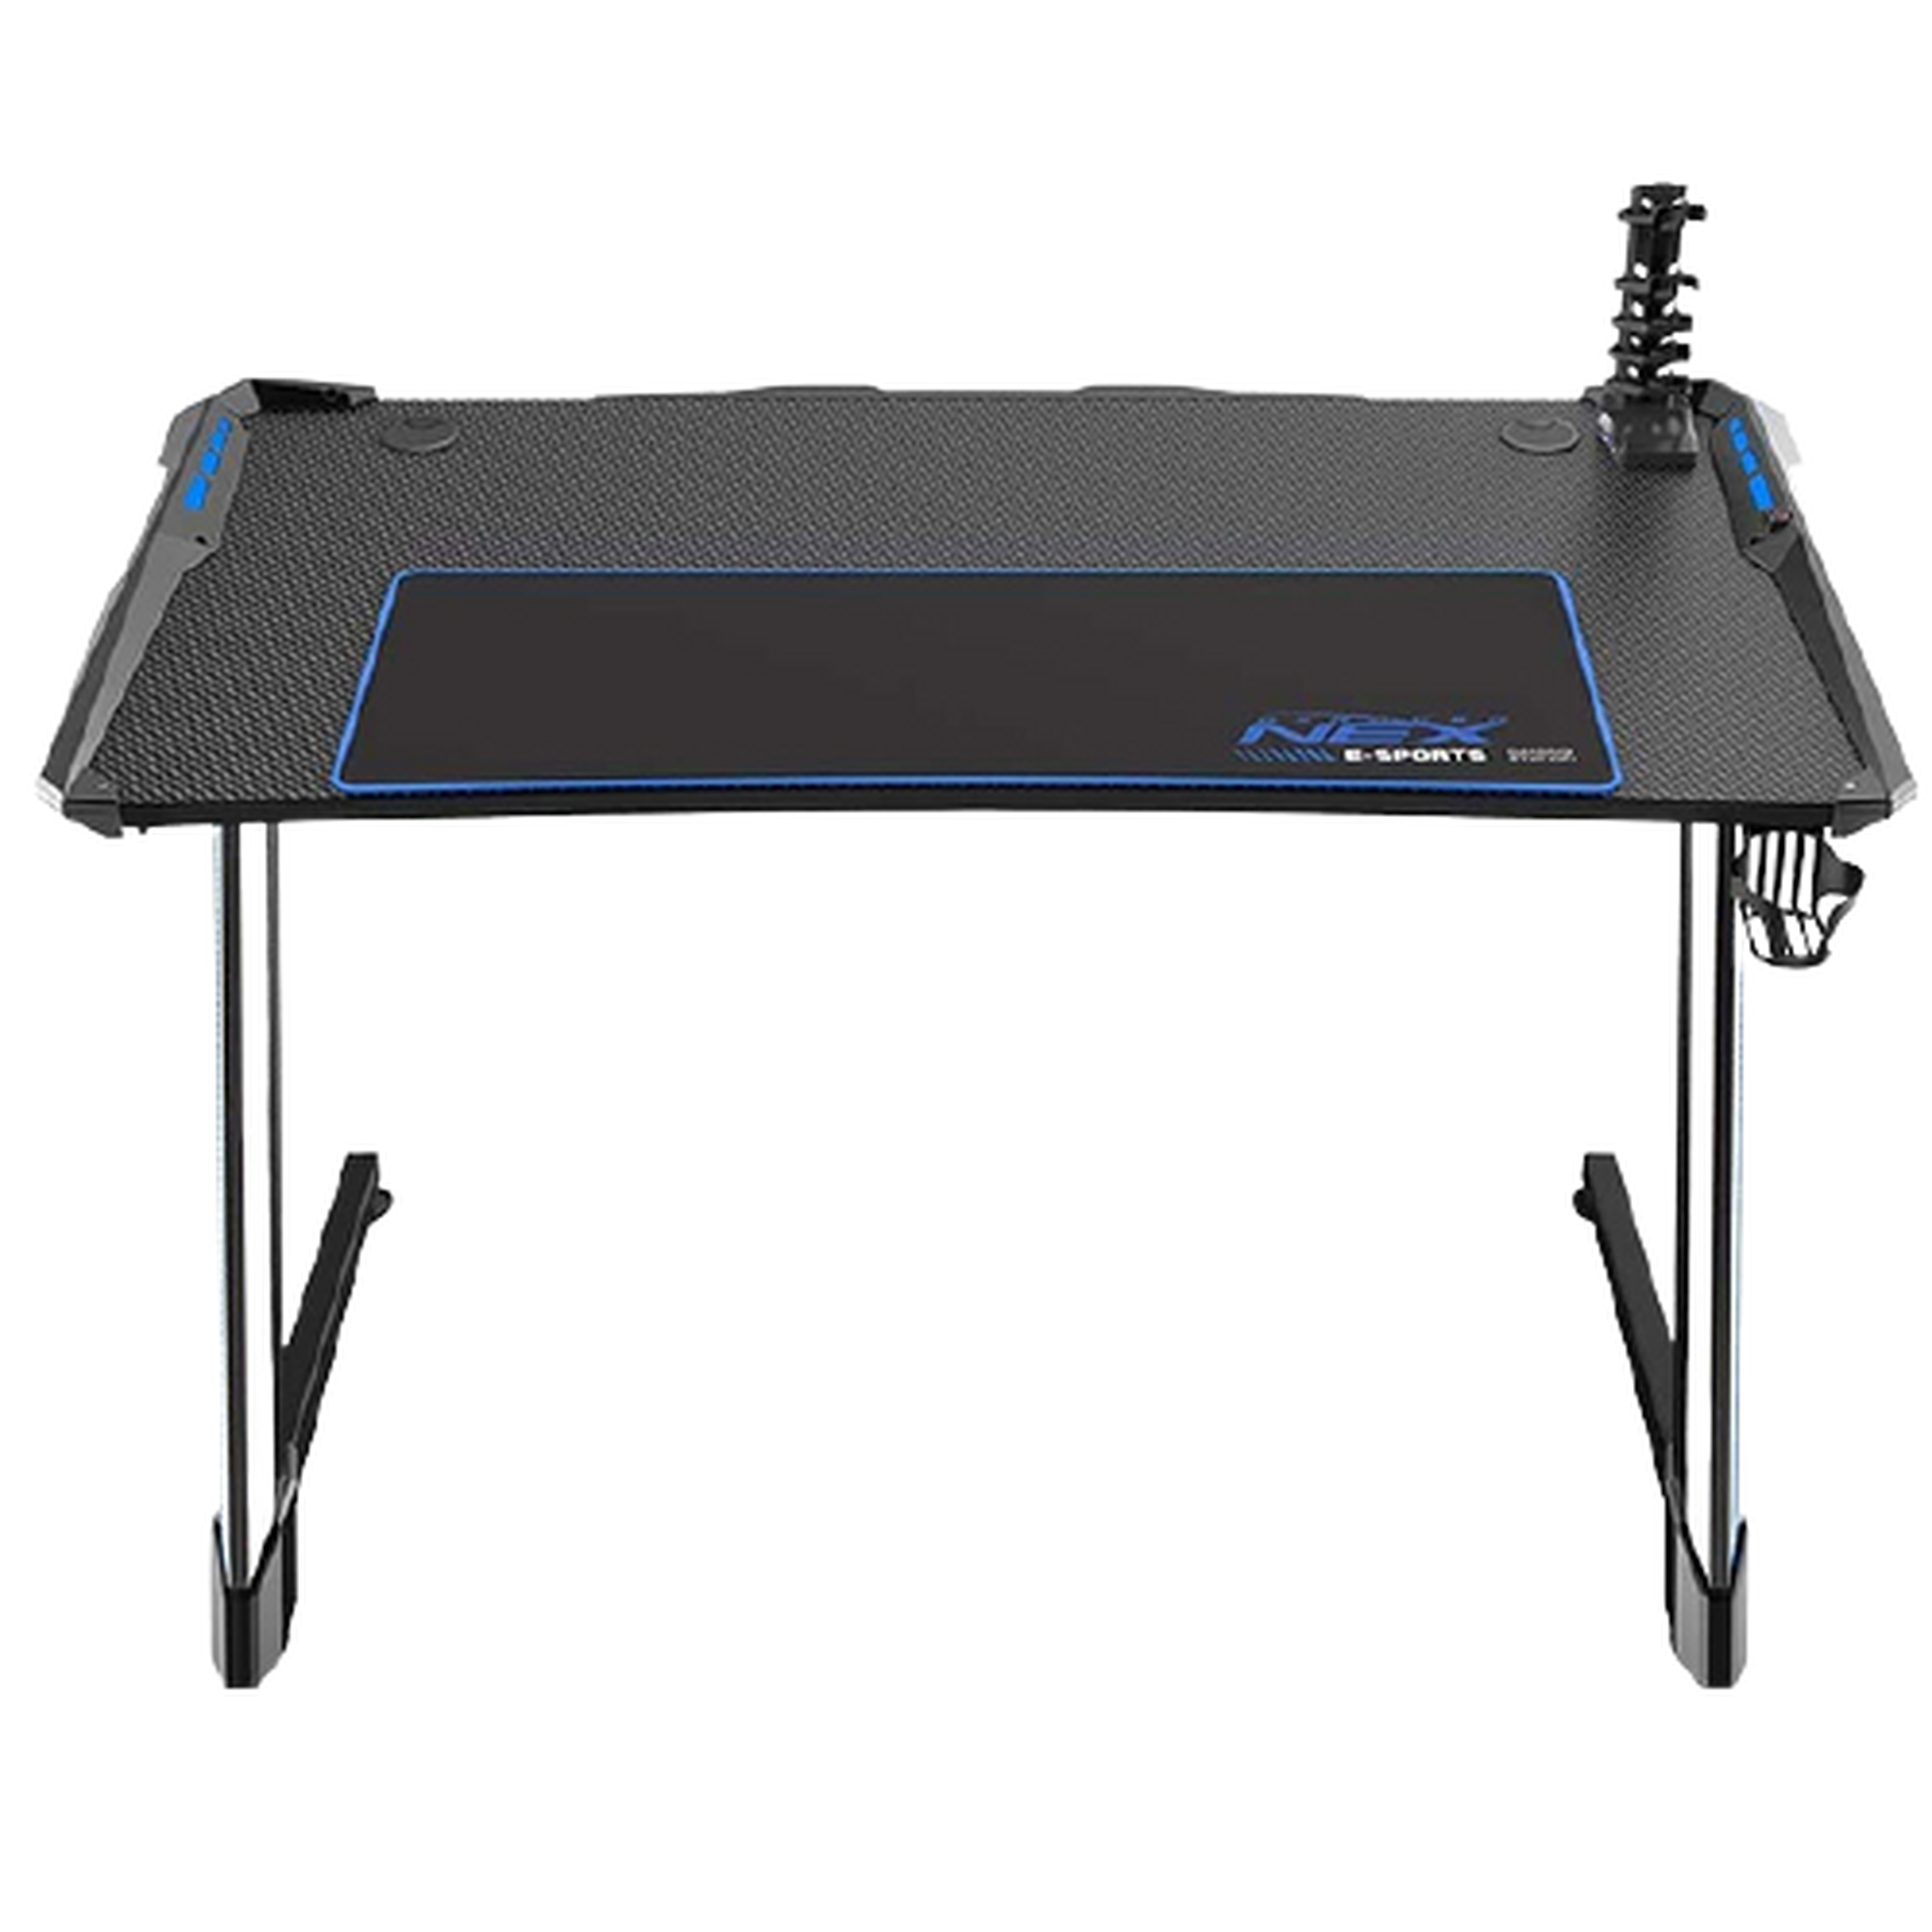 Dxracer Nex Gaming Desk – Black/Blue